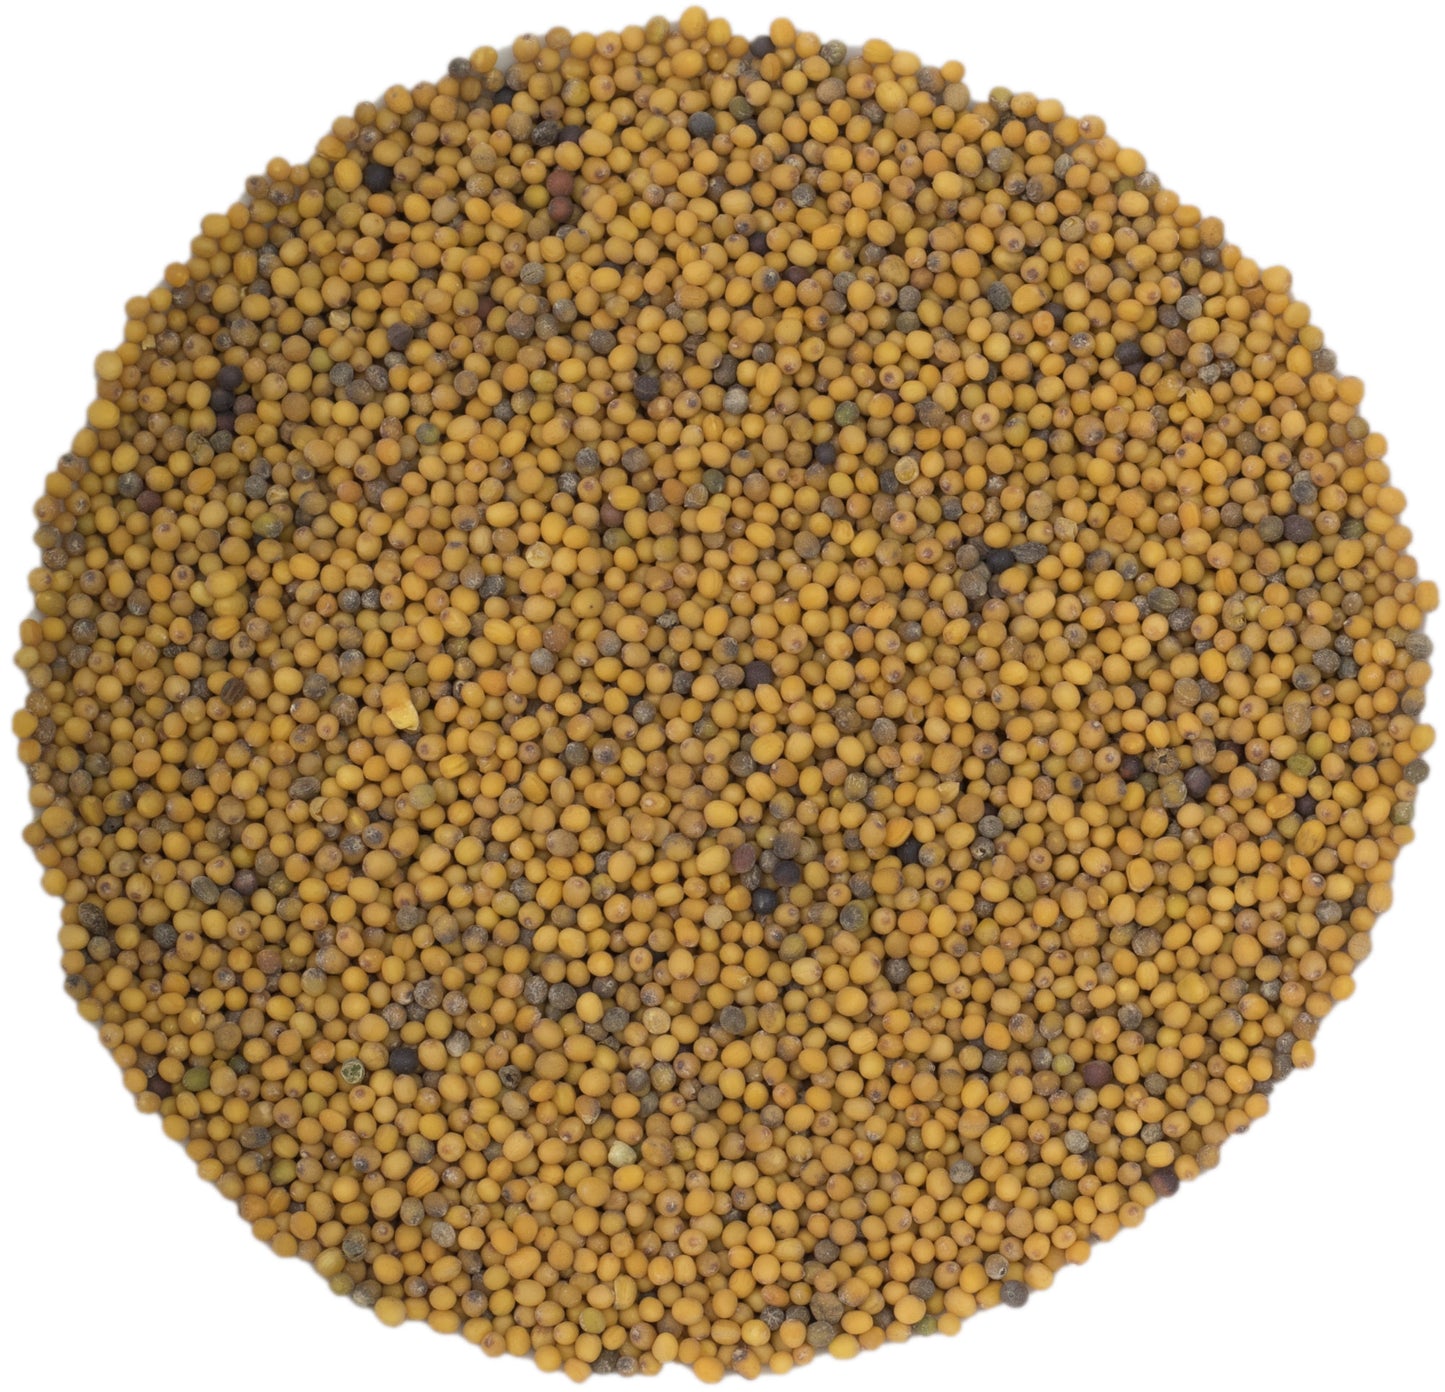 microgreen refill portion | organic sprouting seed and natural hemp grow mat